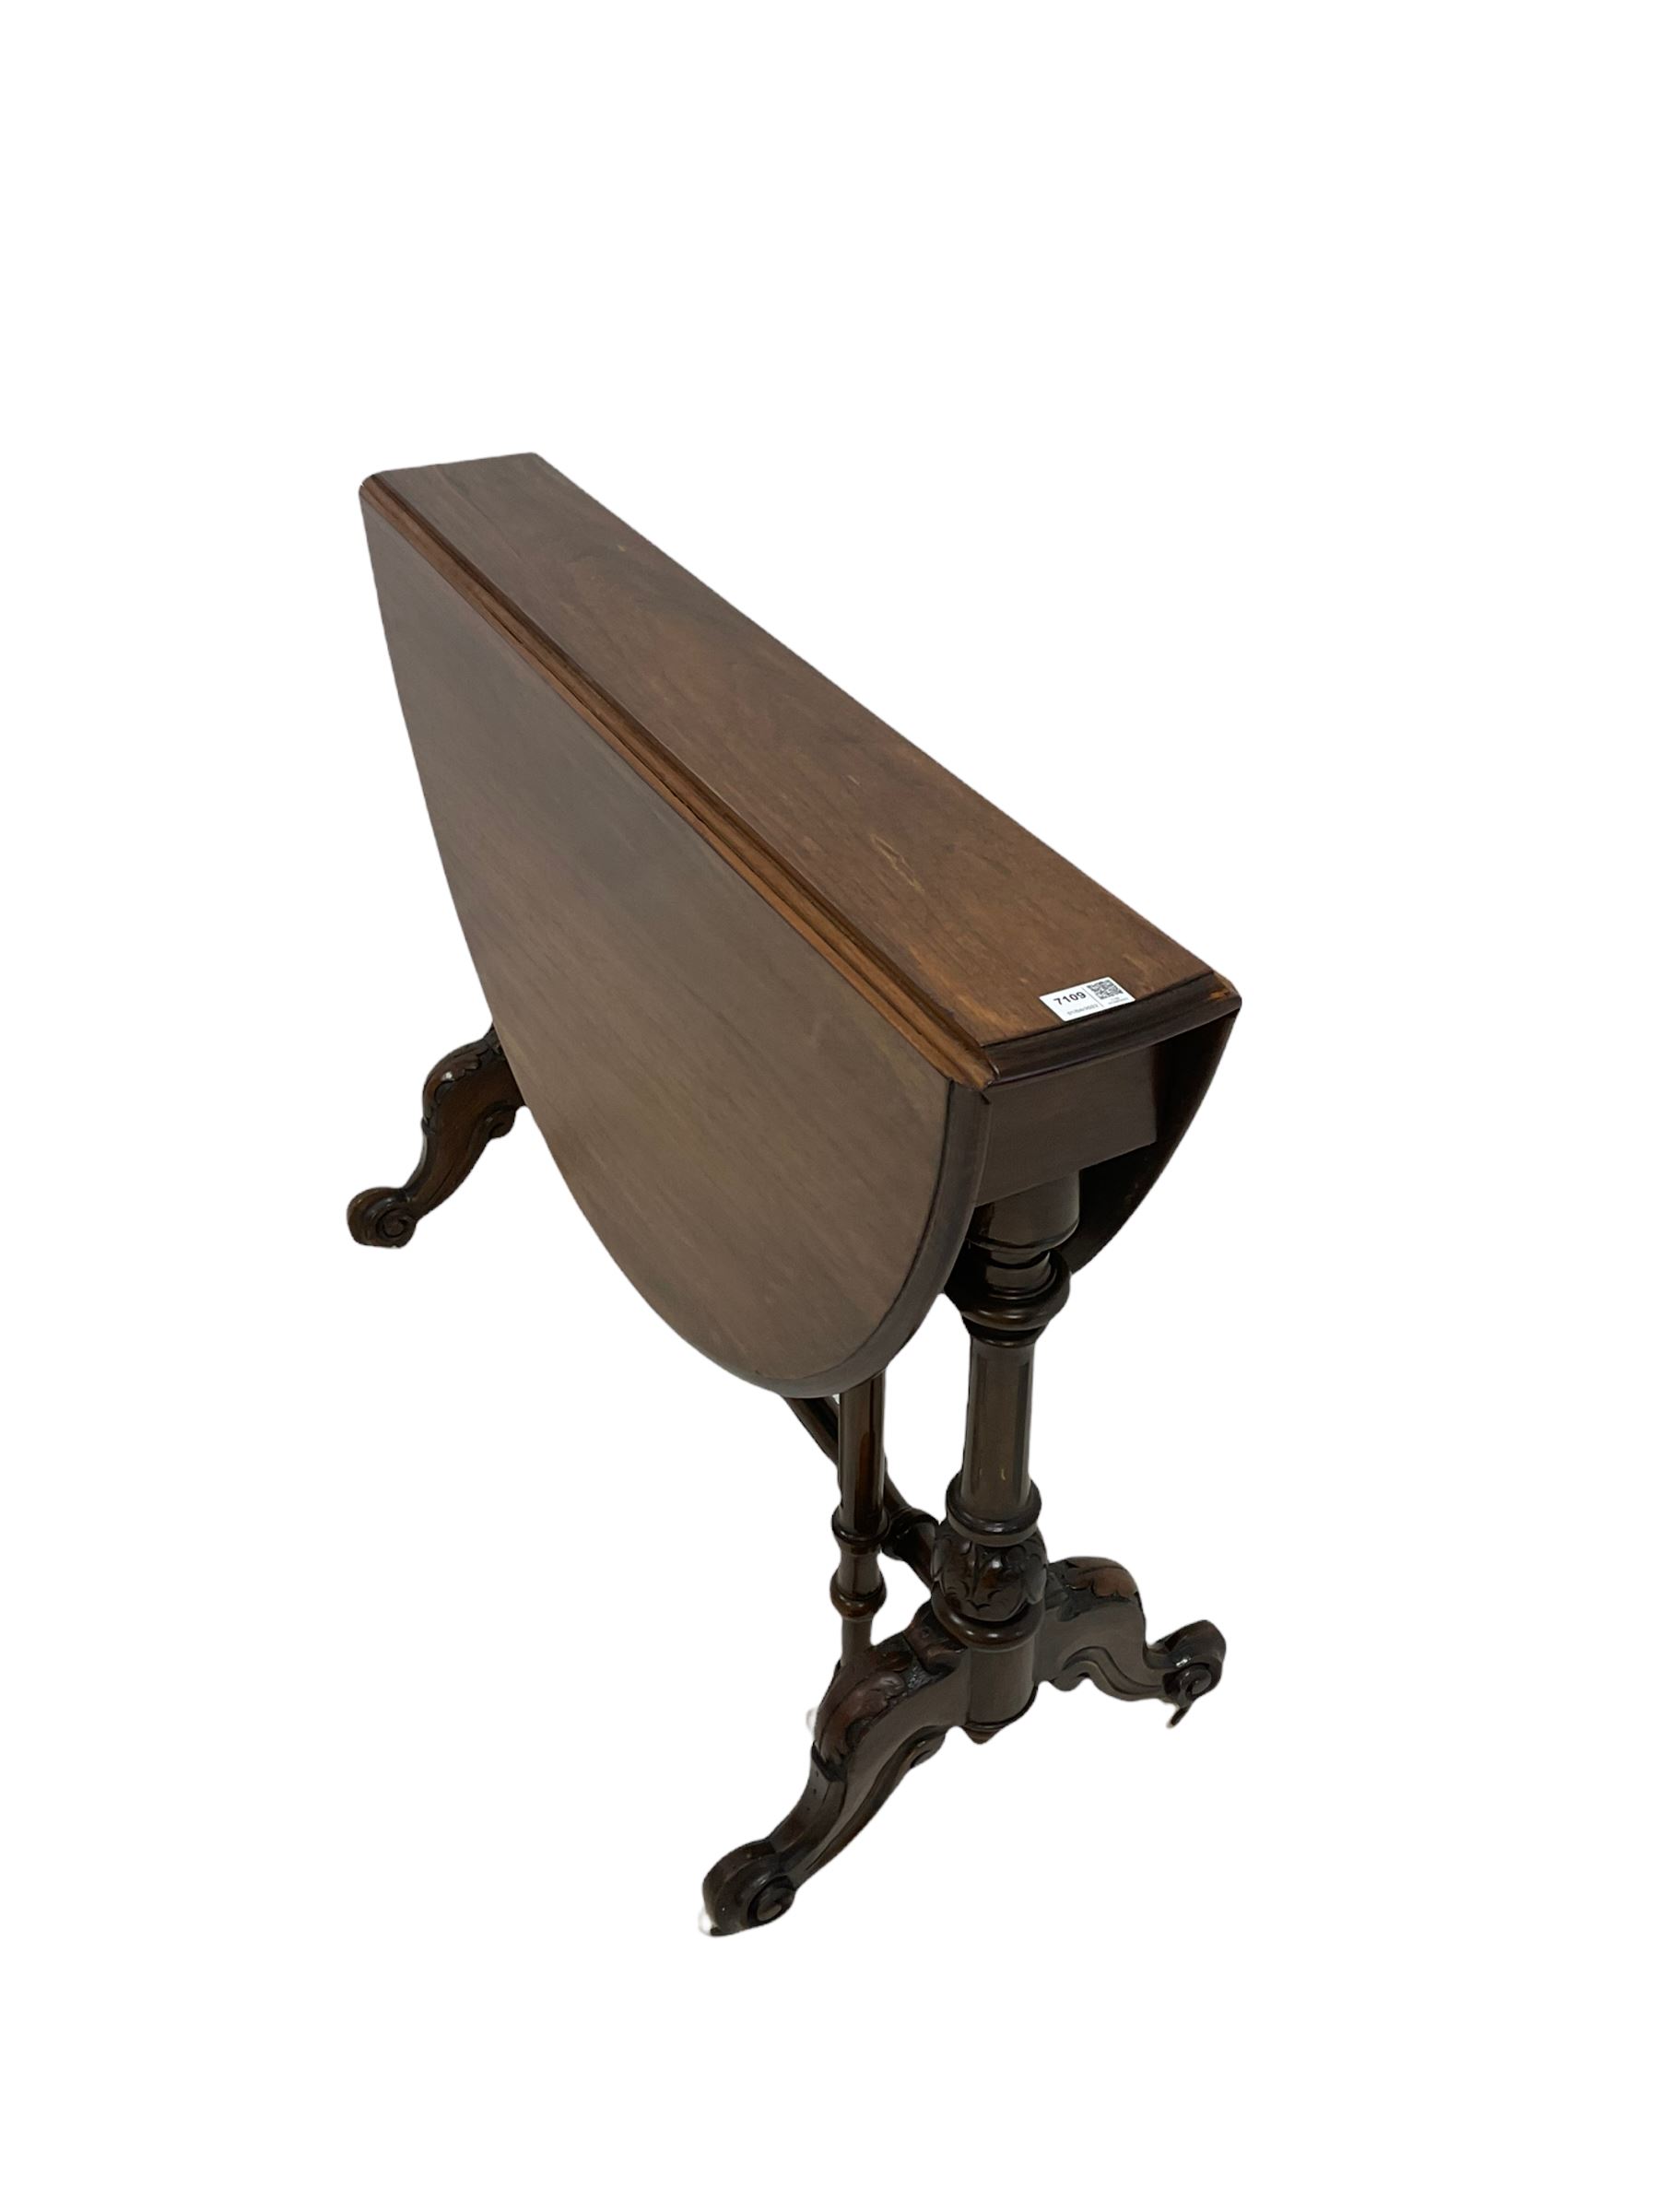 Victorian mahogany drop leaf table - Image 5 of 5